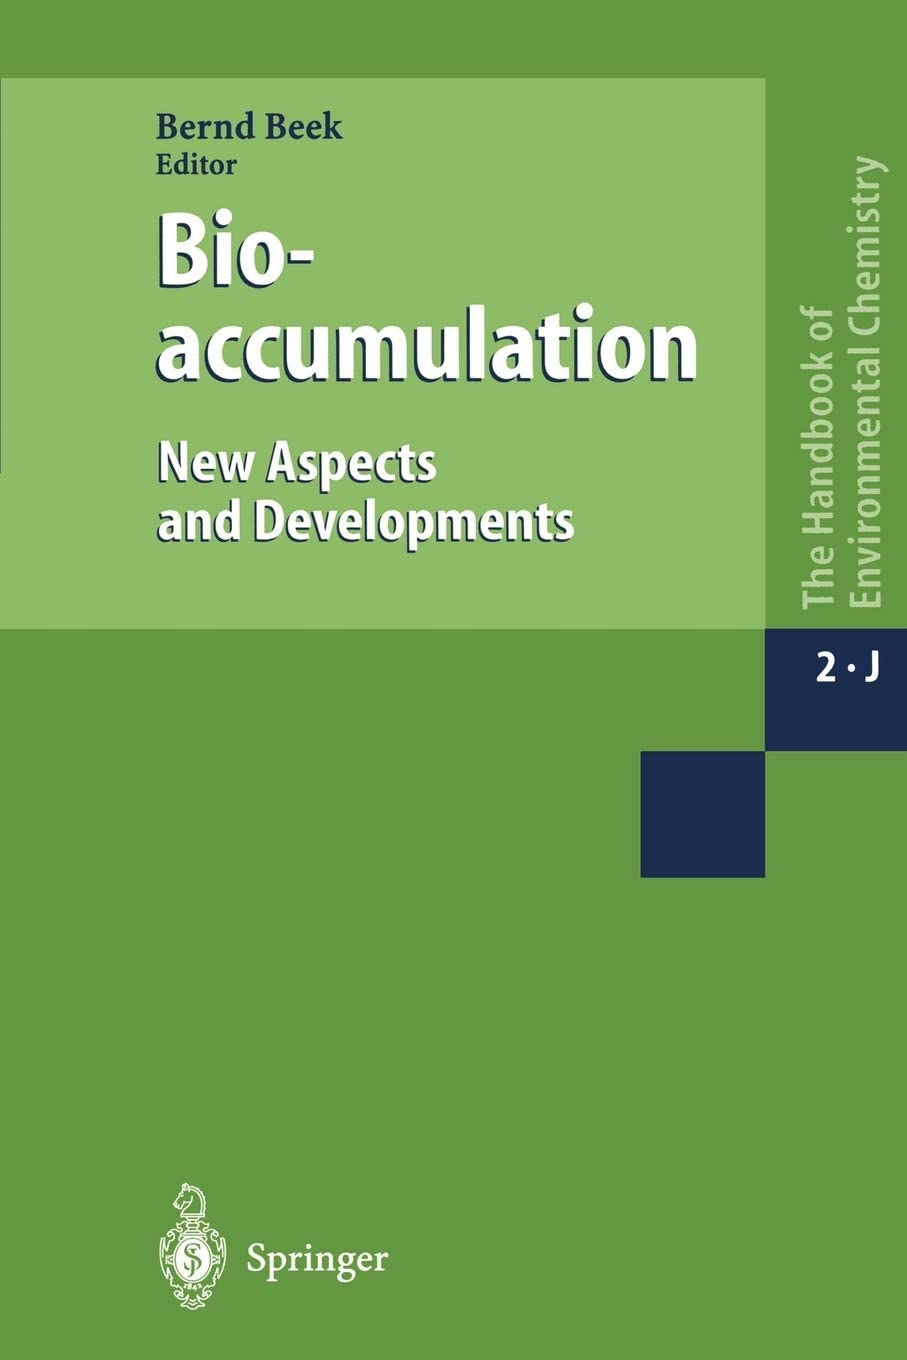 Bioaccumulation New Aspects and Developments (The Handbook of Environmental Chemistry, 2 / 2J)